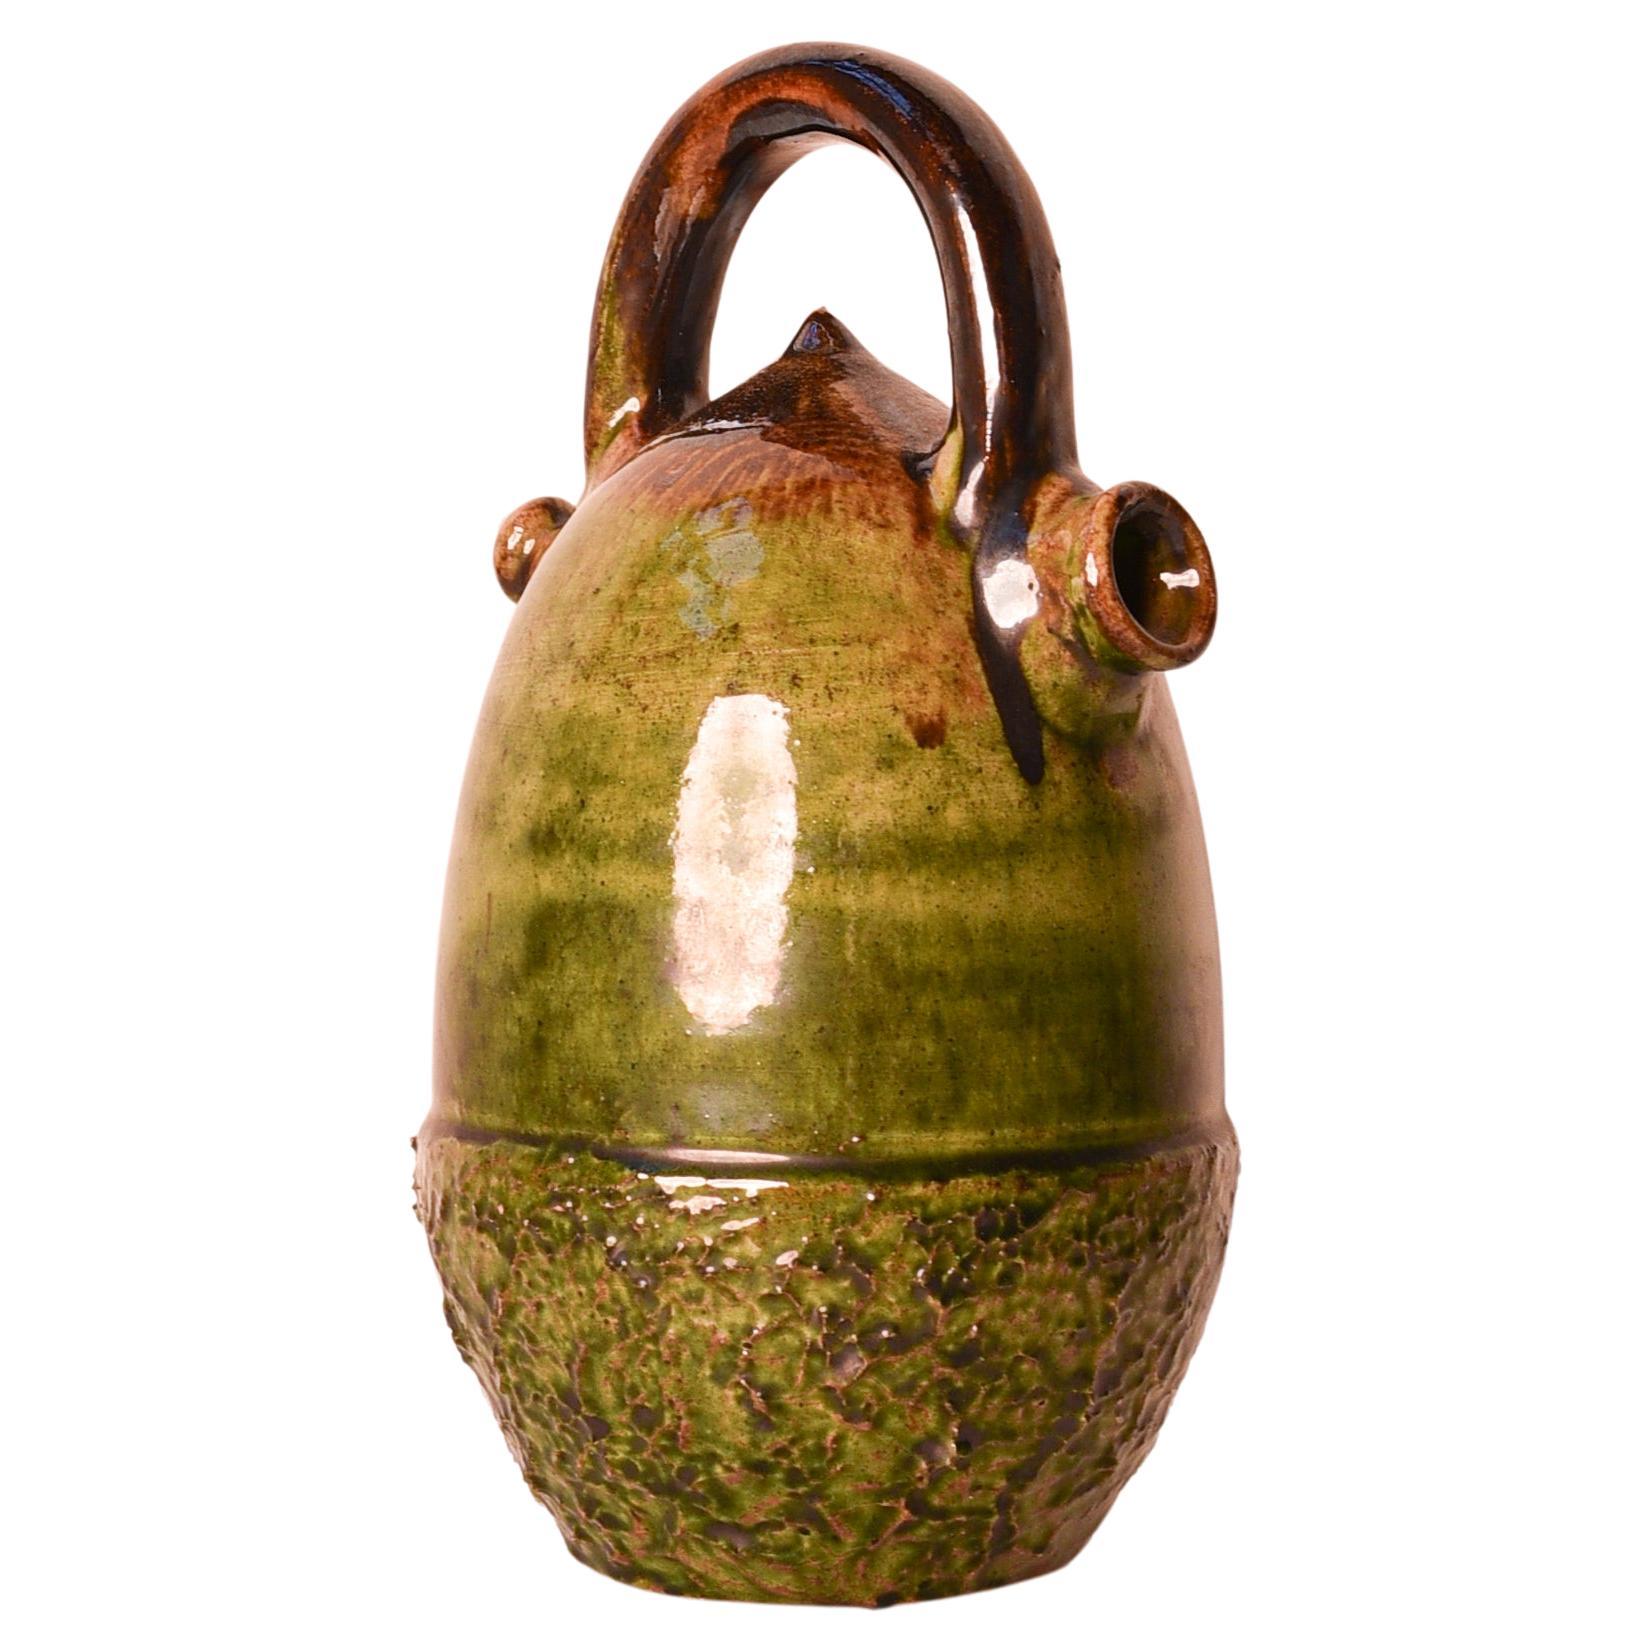 Spanish glazed terracotta botijo/ búcaro or water jar in the shape of an acorn For Sale